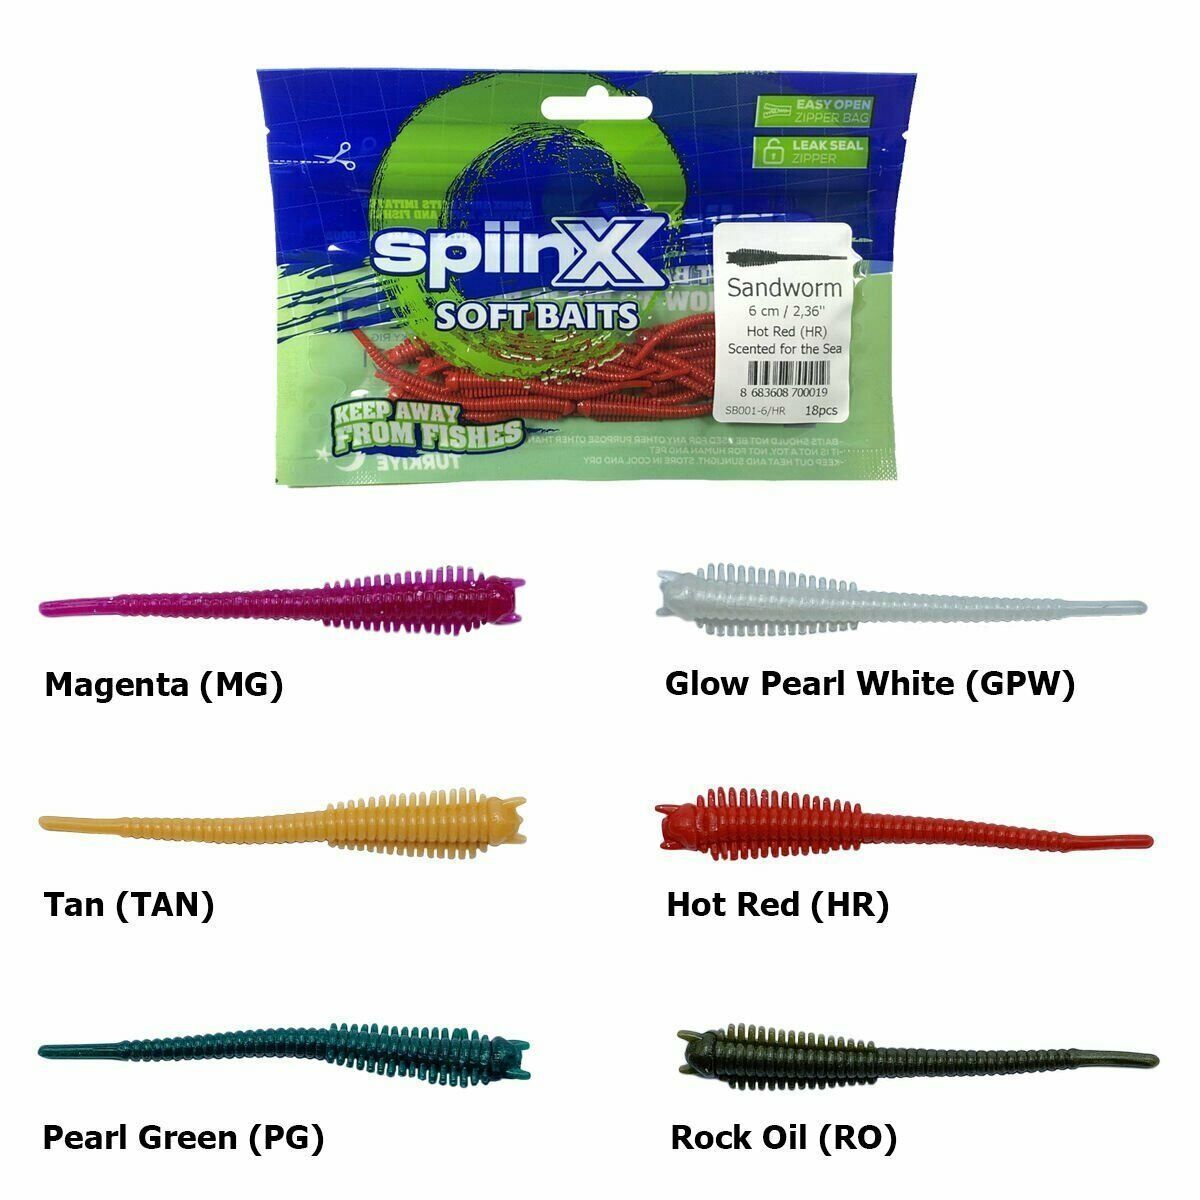 Spiinx Soft Baits Sandworm 6 cm Kokulu Silikon Yem Hot Red (HR)